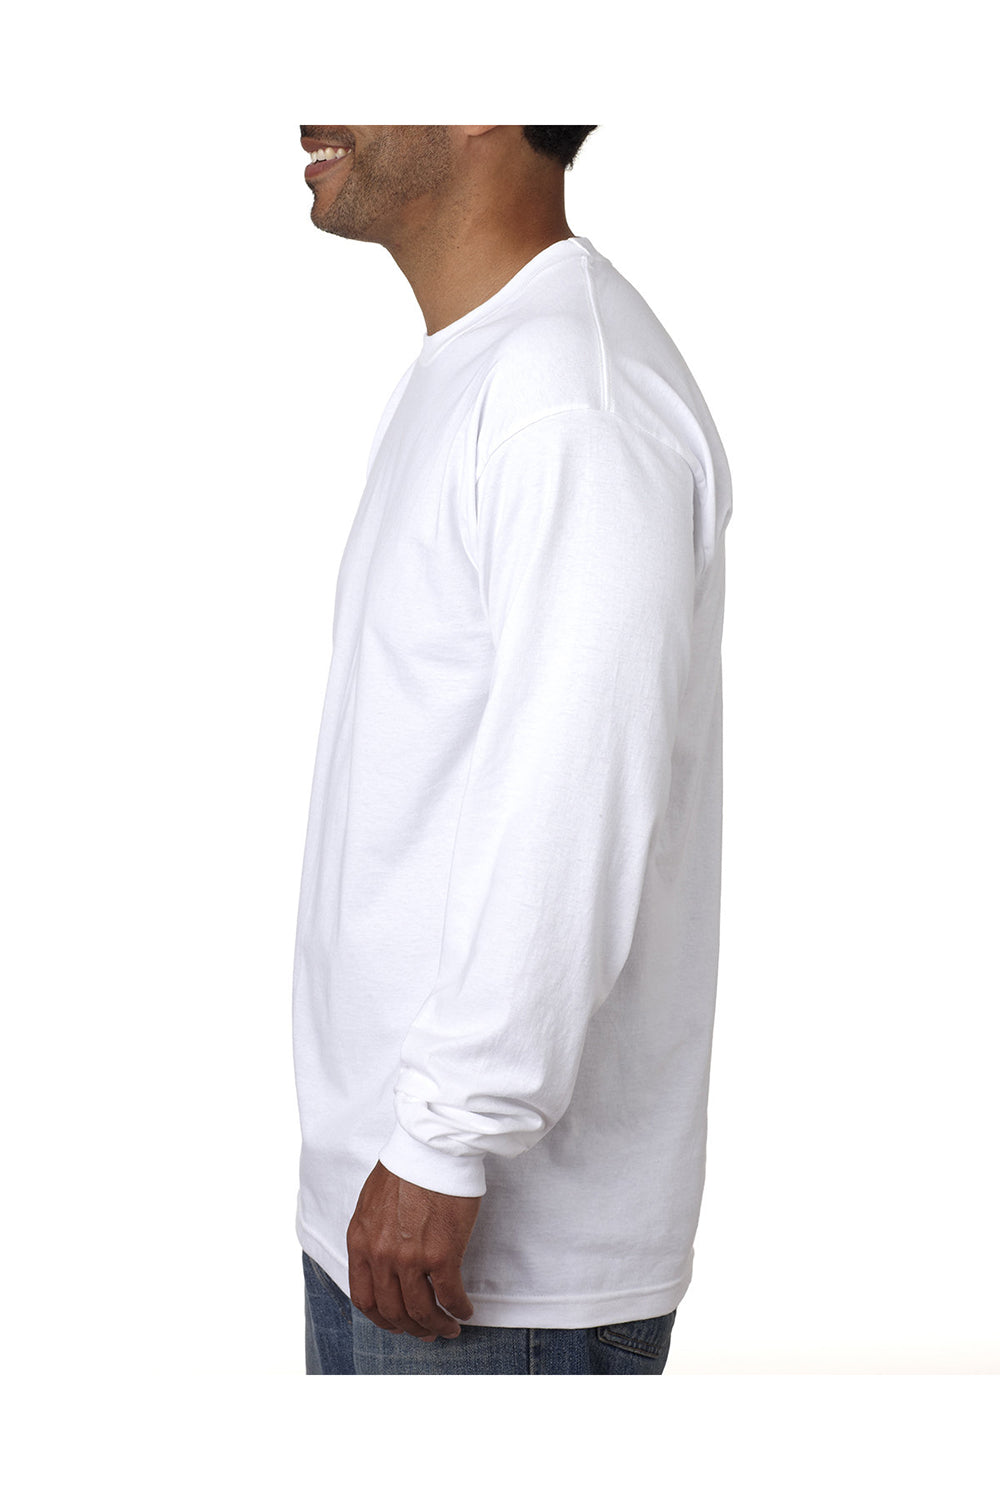 Bayside BA5060 Mens USA Made Long Sleeve Crewneck T-Shirt White Model Side